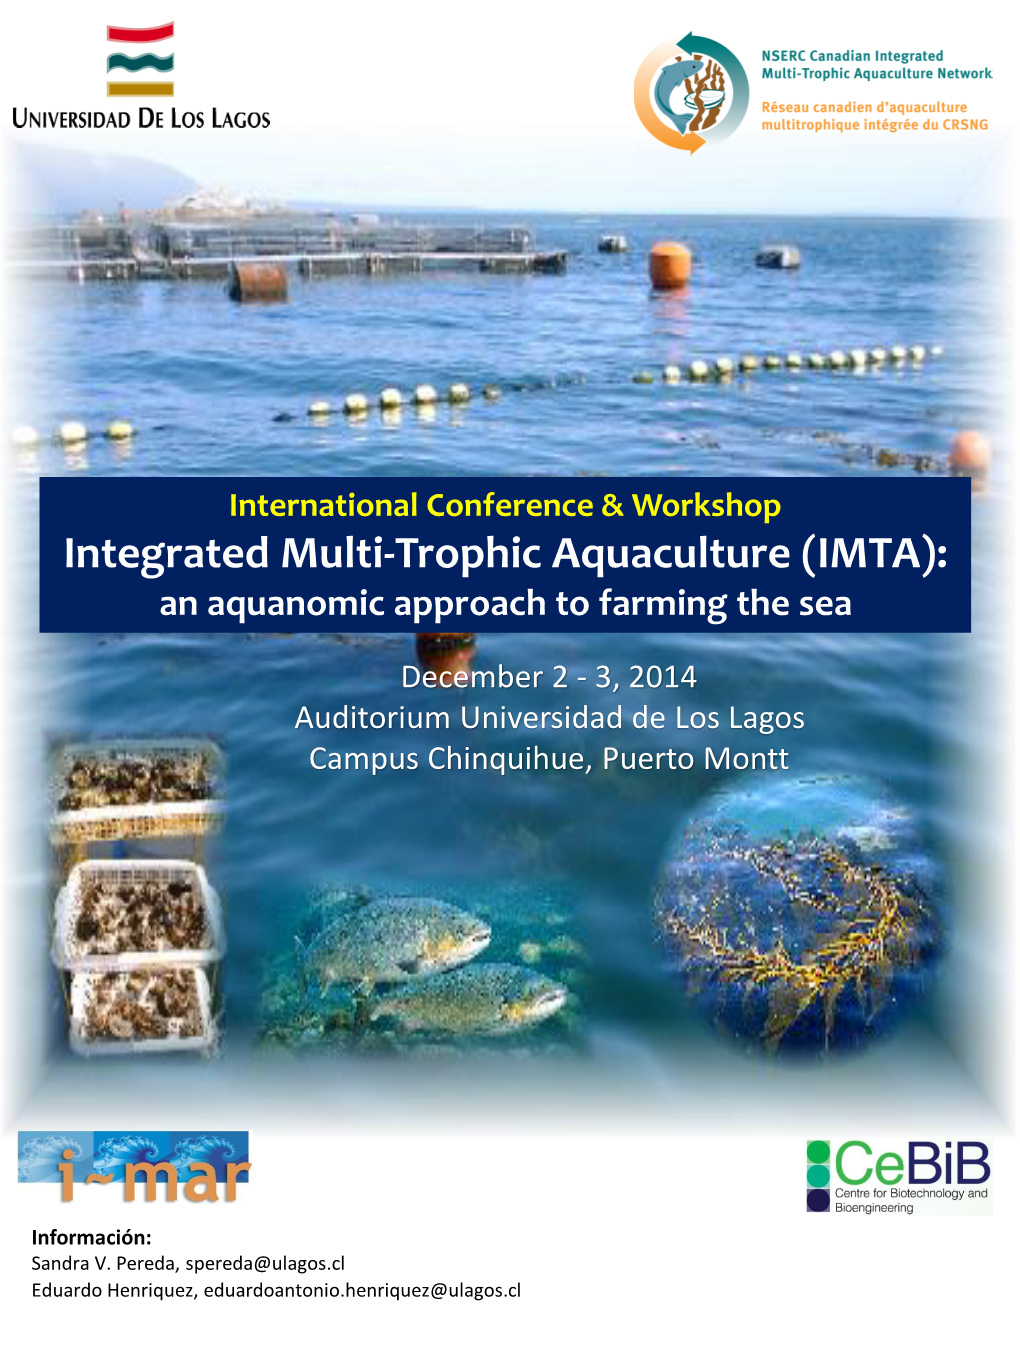 Integrated Multi-Trophic Aquaculture (IMTA): an Aquanomic Approach to Farming the Sea